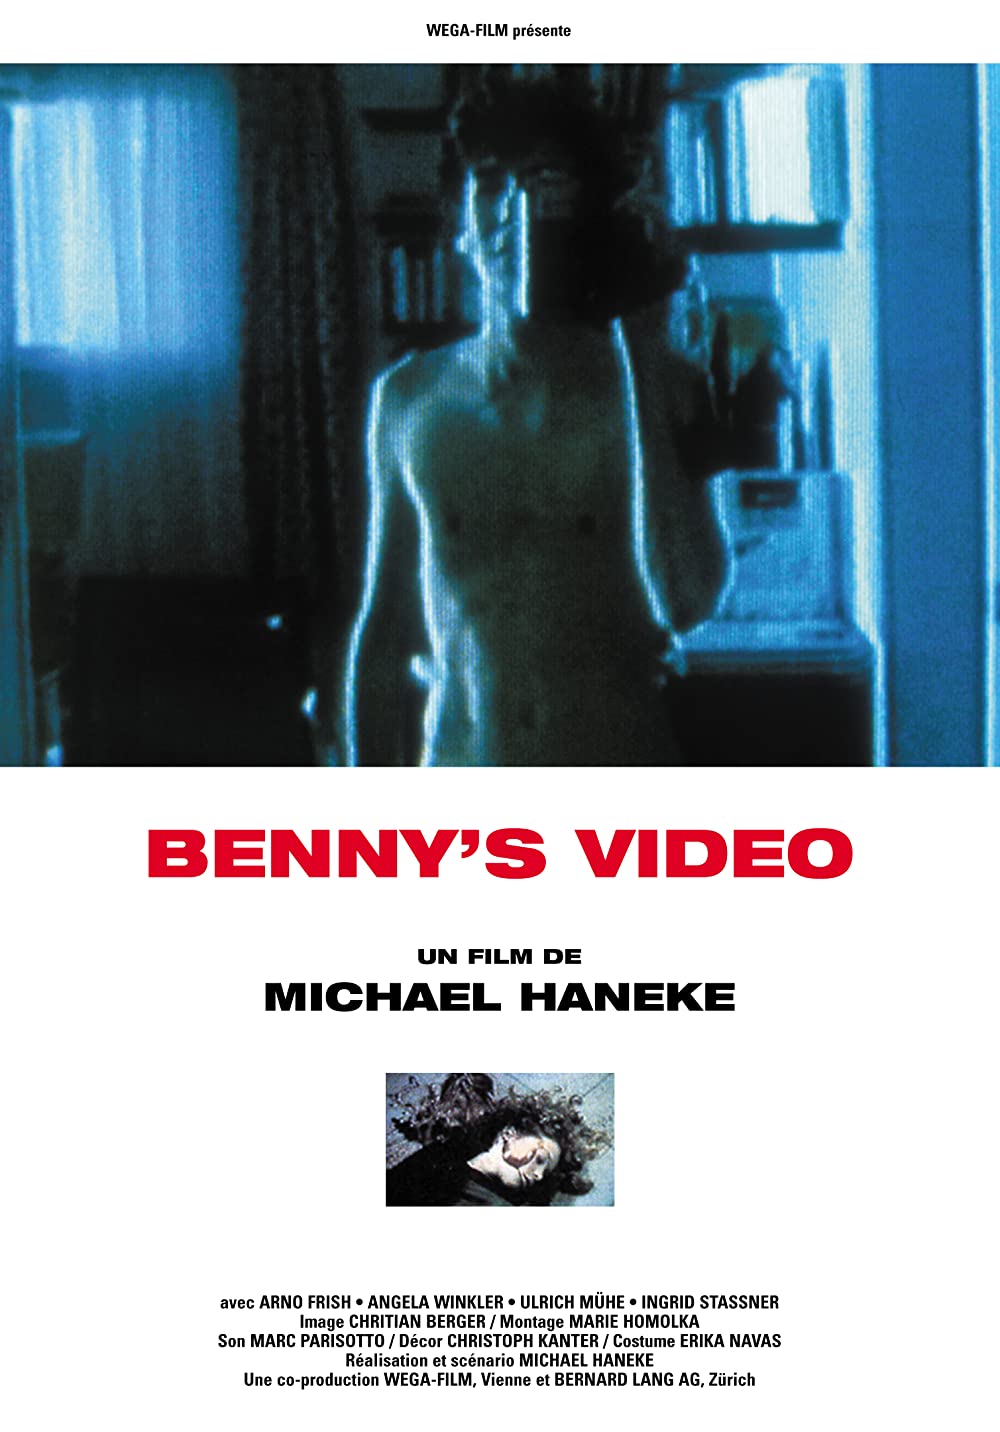 Filmbeschreibung zu Bennys Video